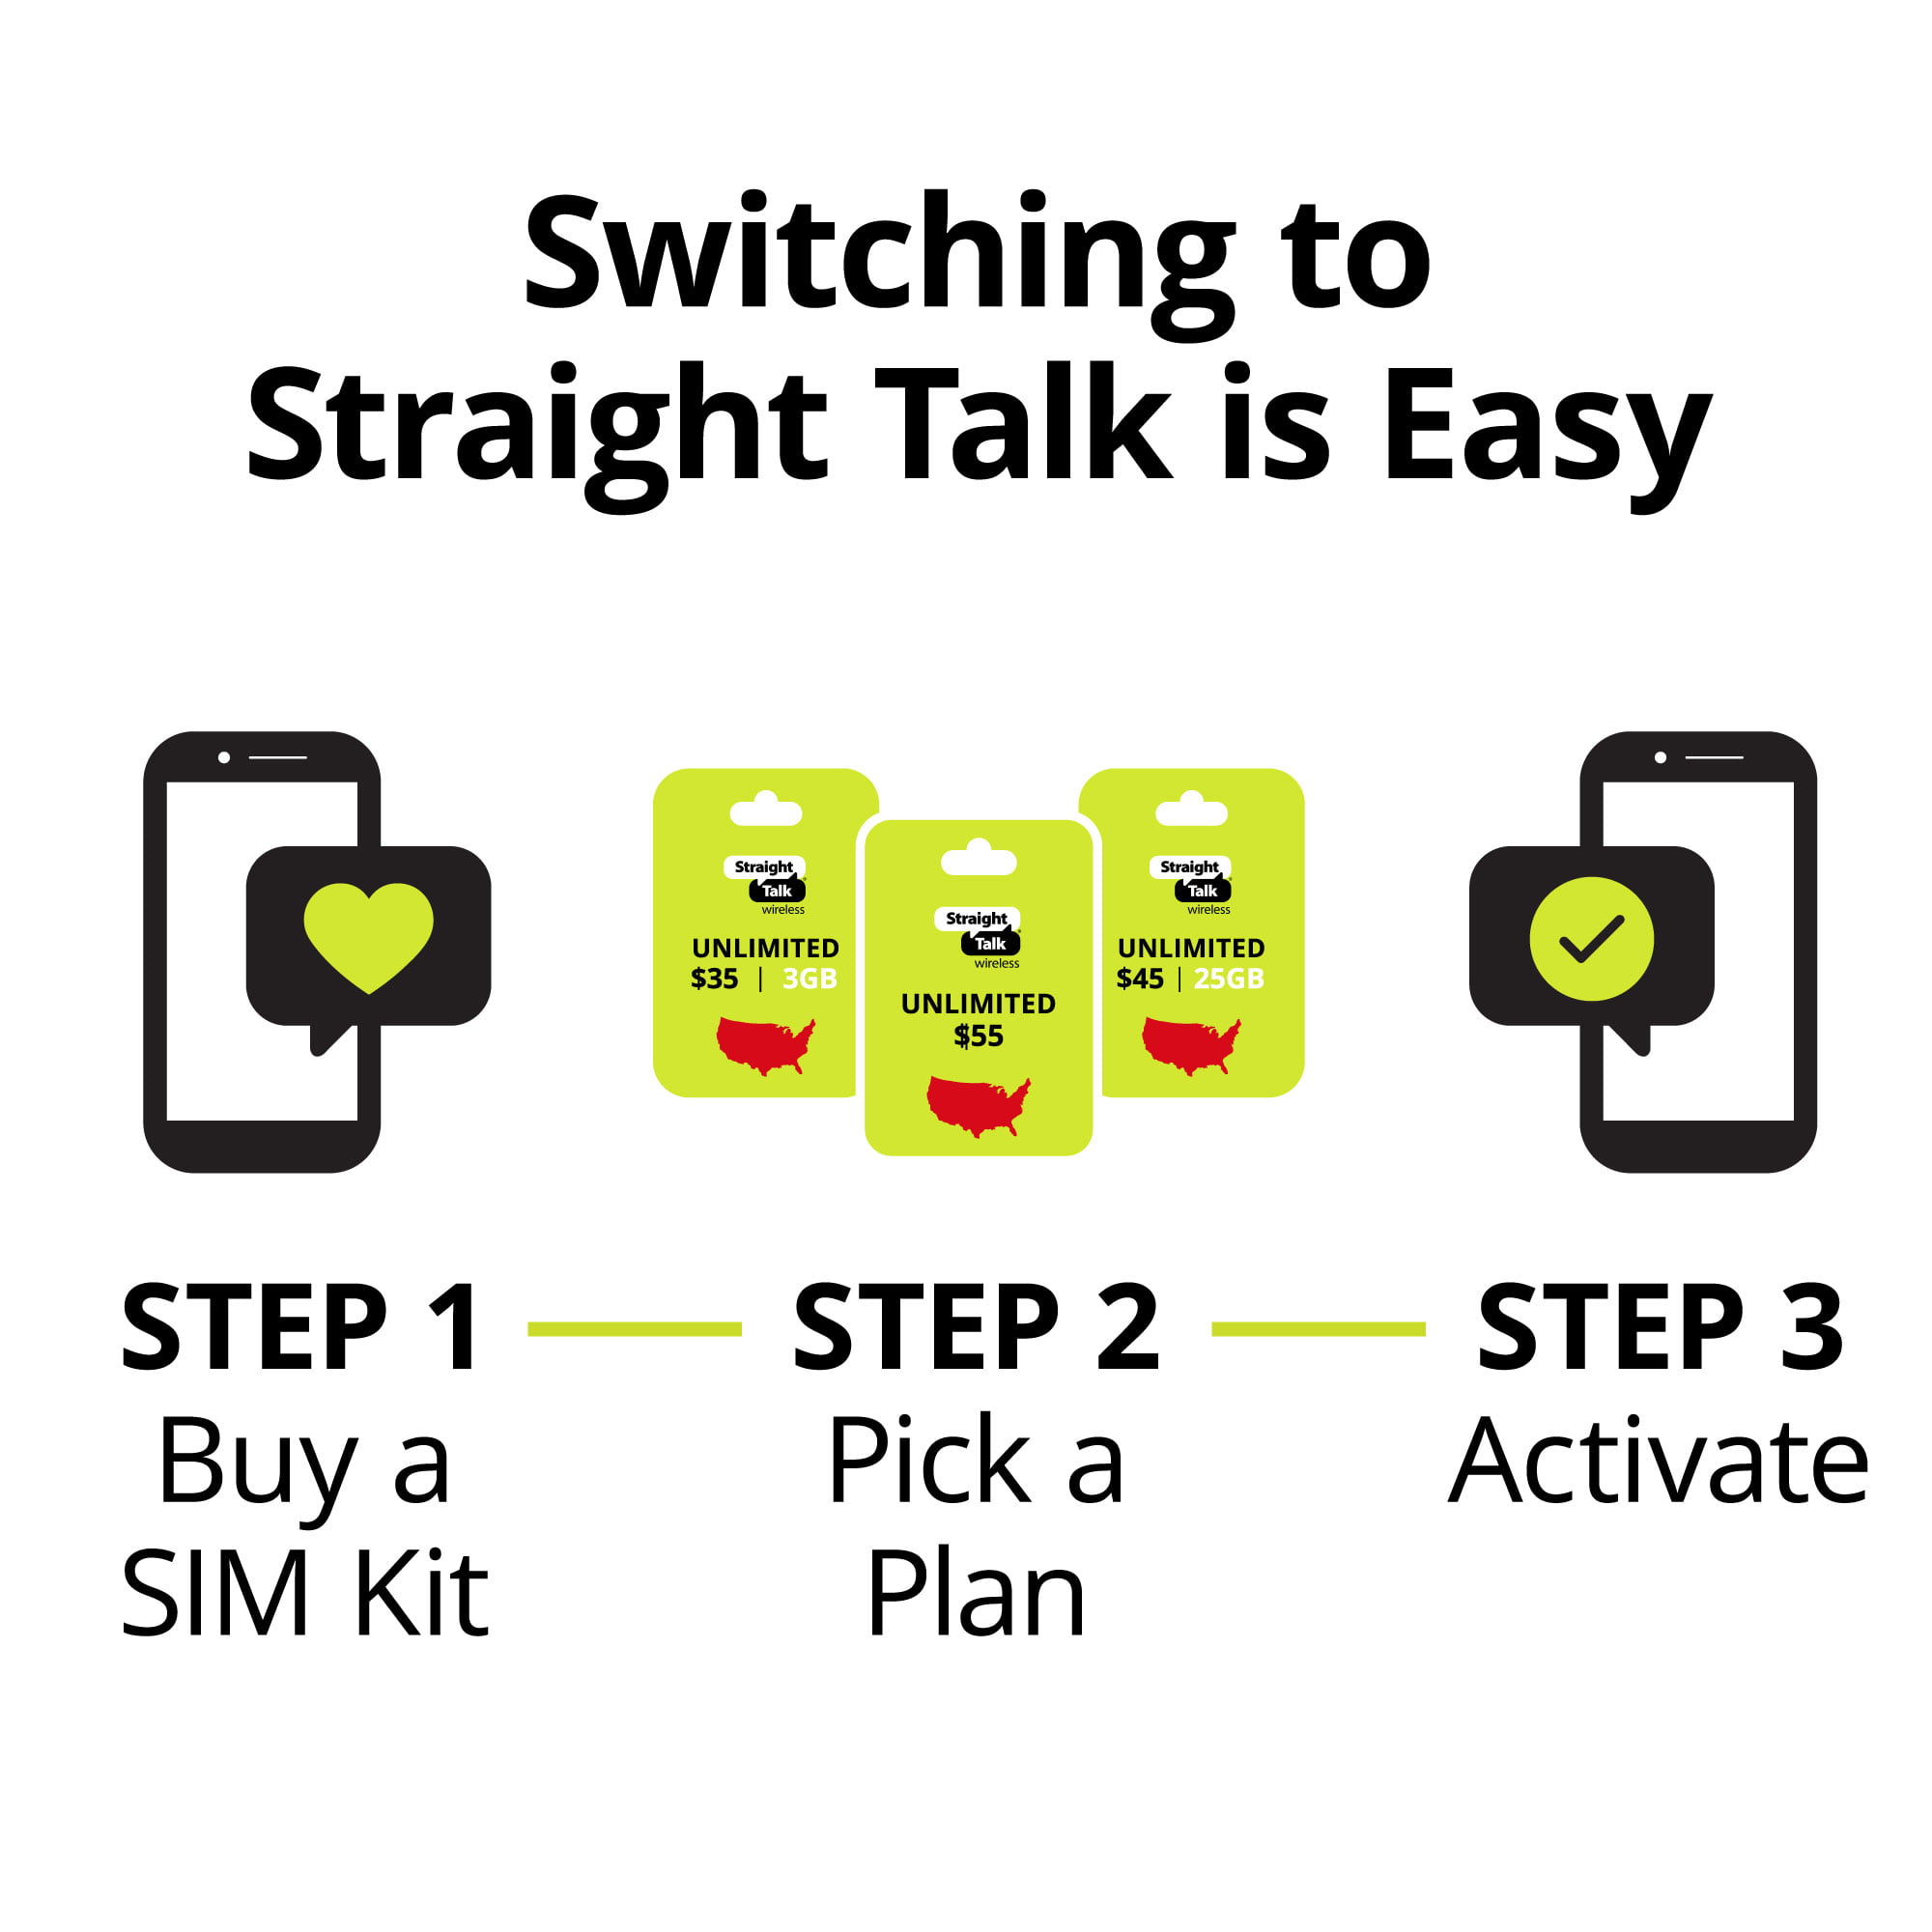 straight talk sim card